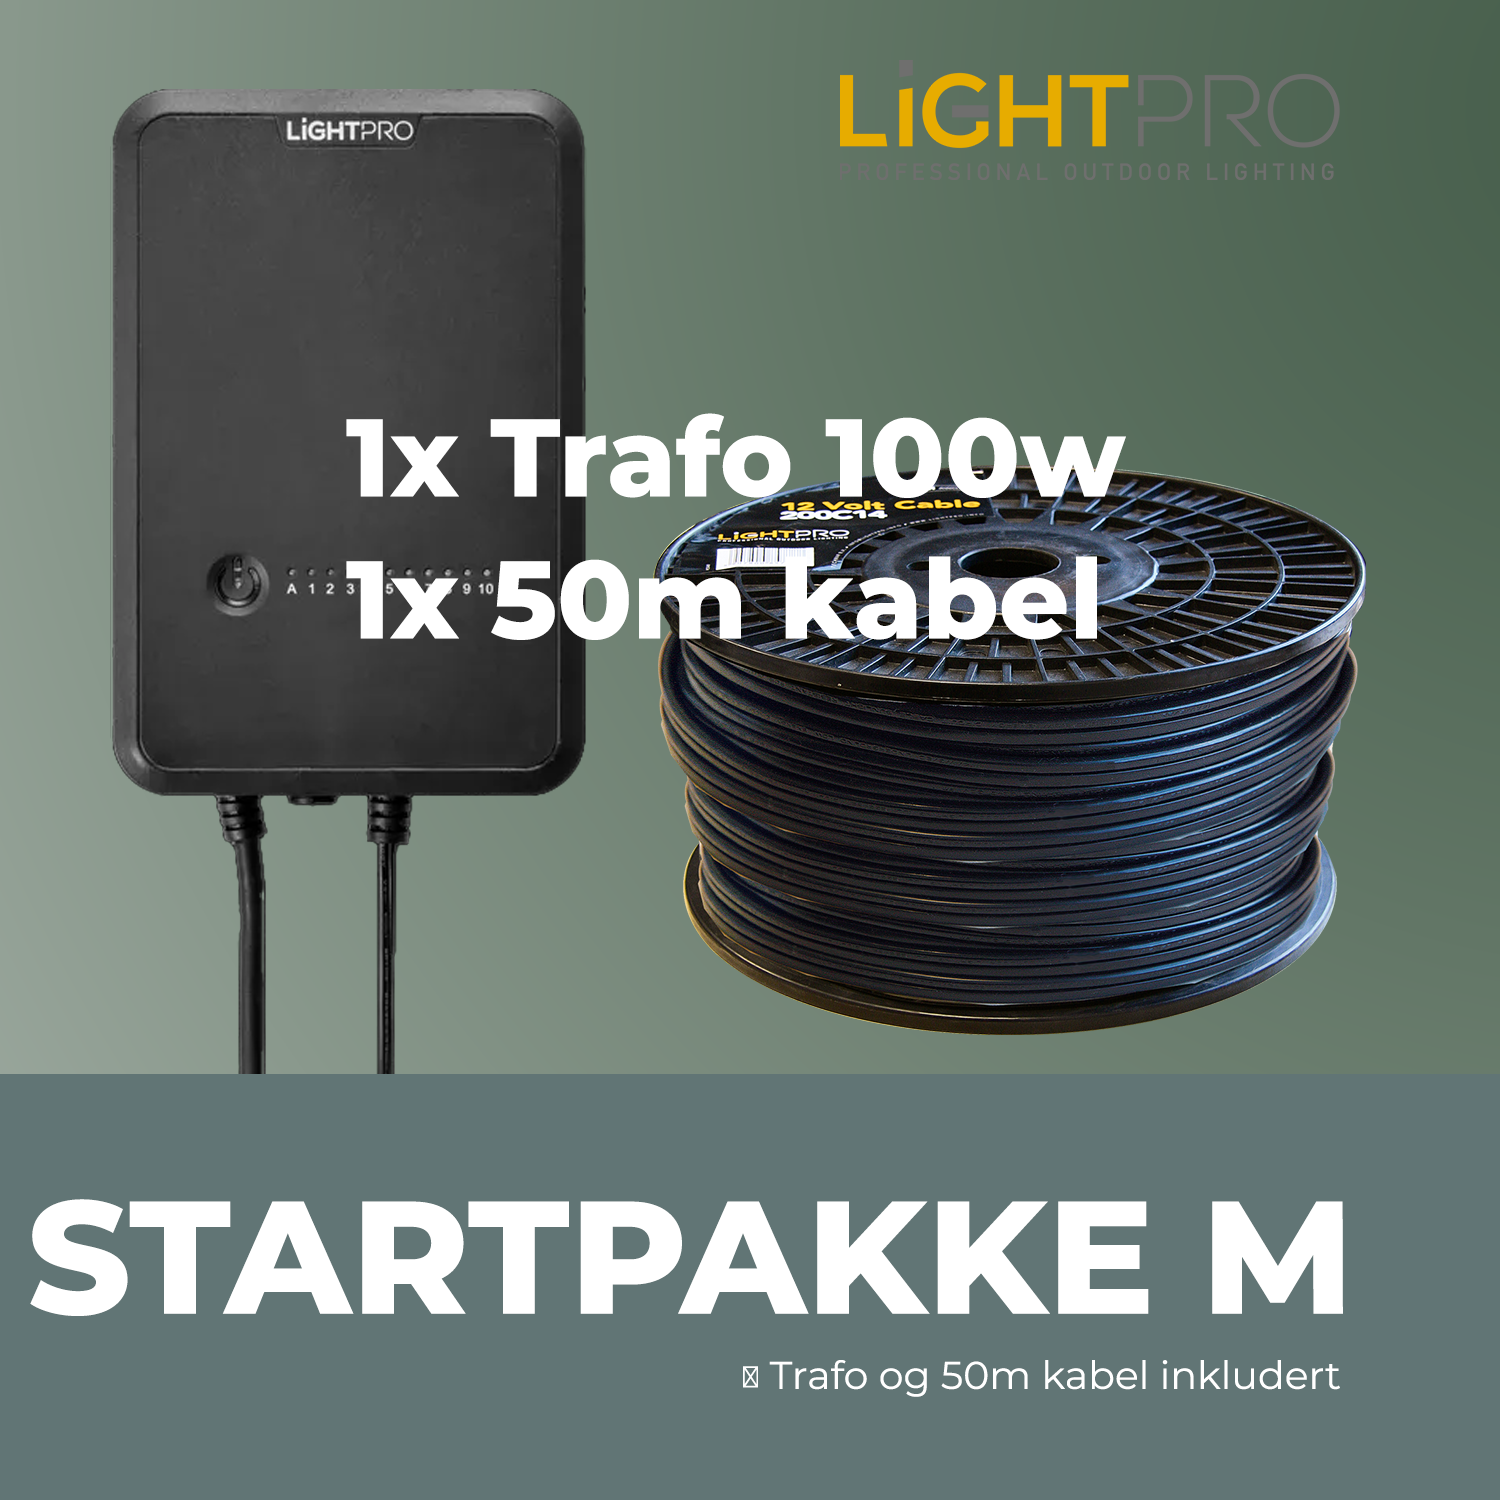 lightpro_startpakke M